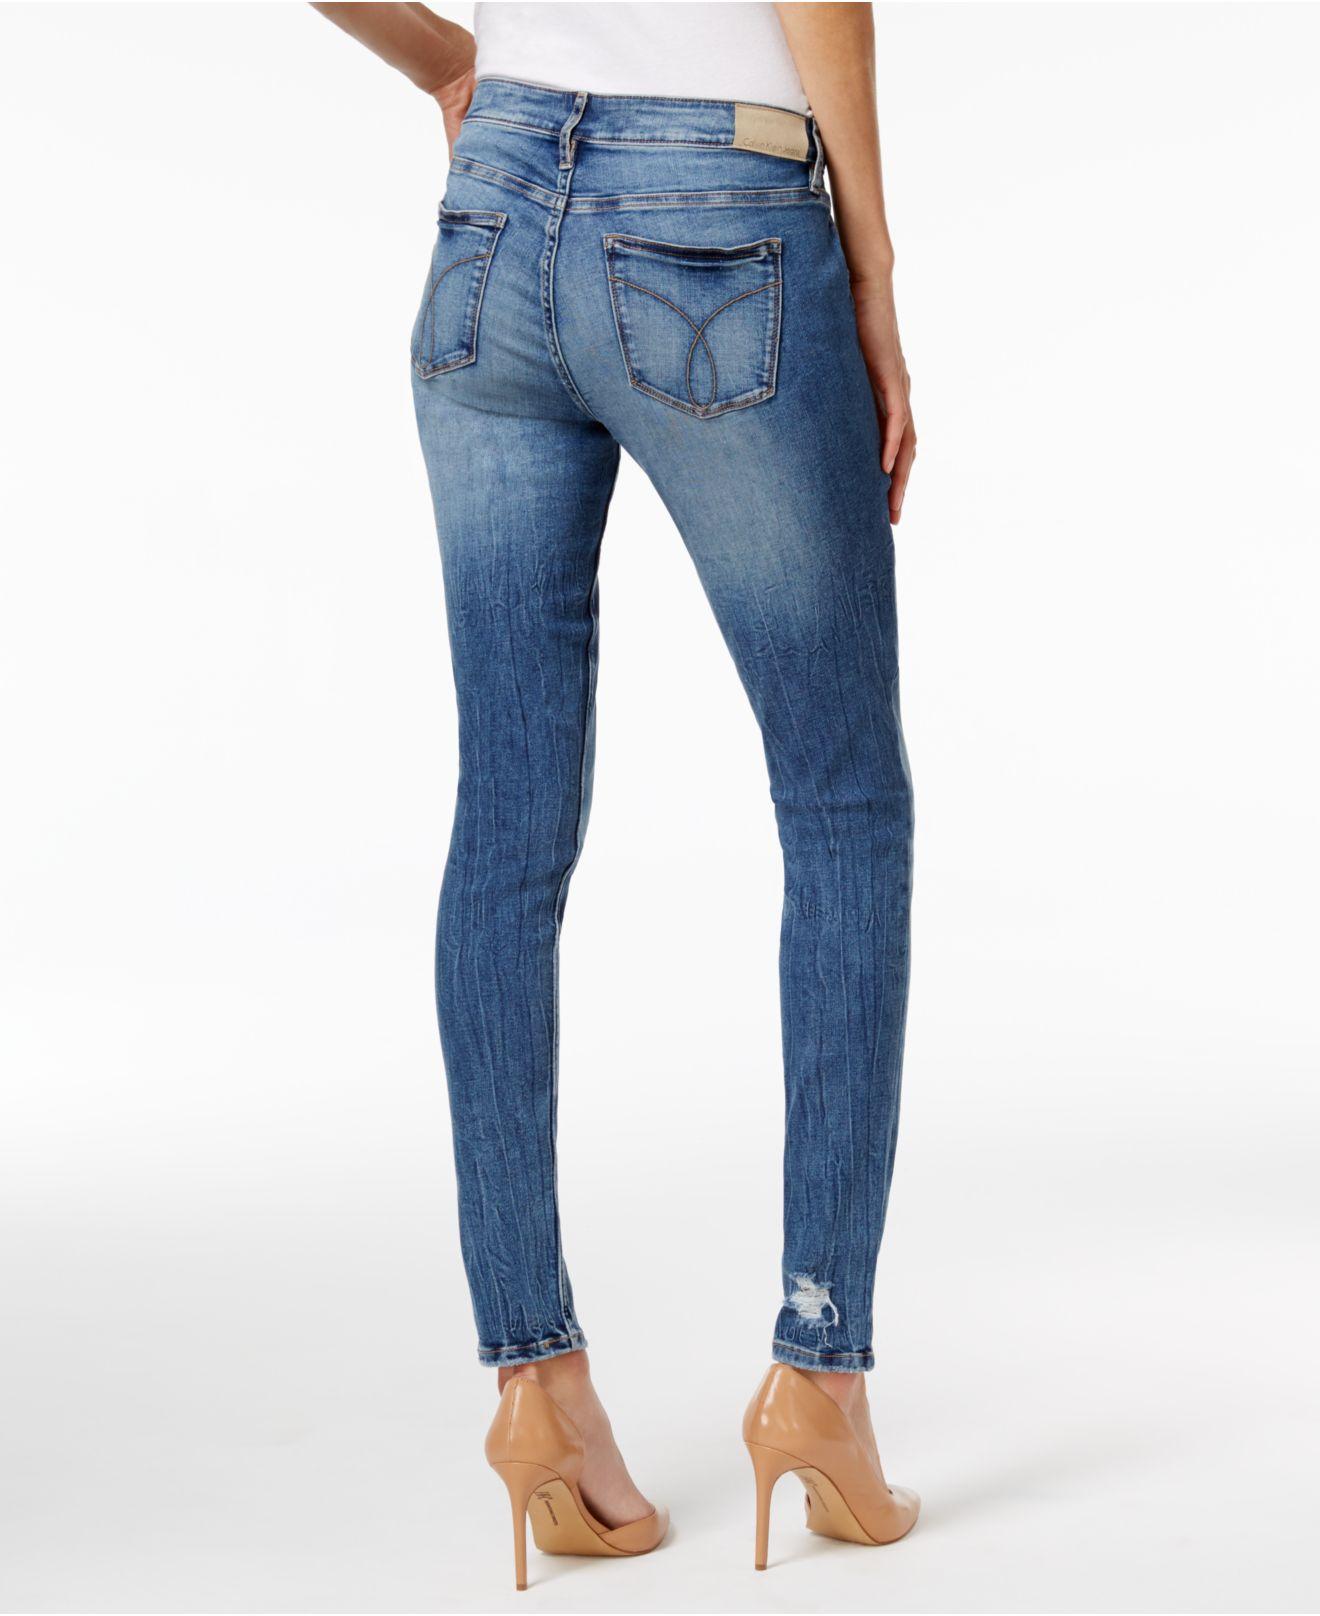 Lyst - Calvin Klein Jeans Jeans, Curvy Skinny in Blue